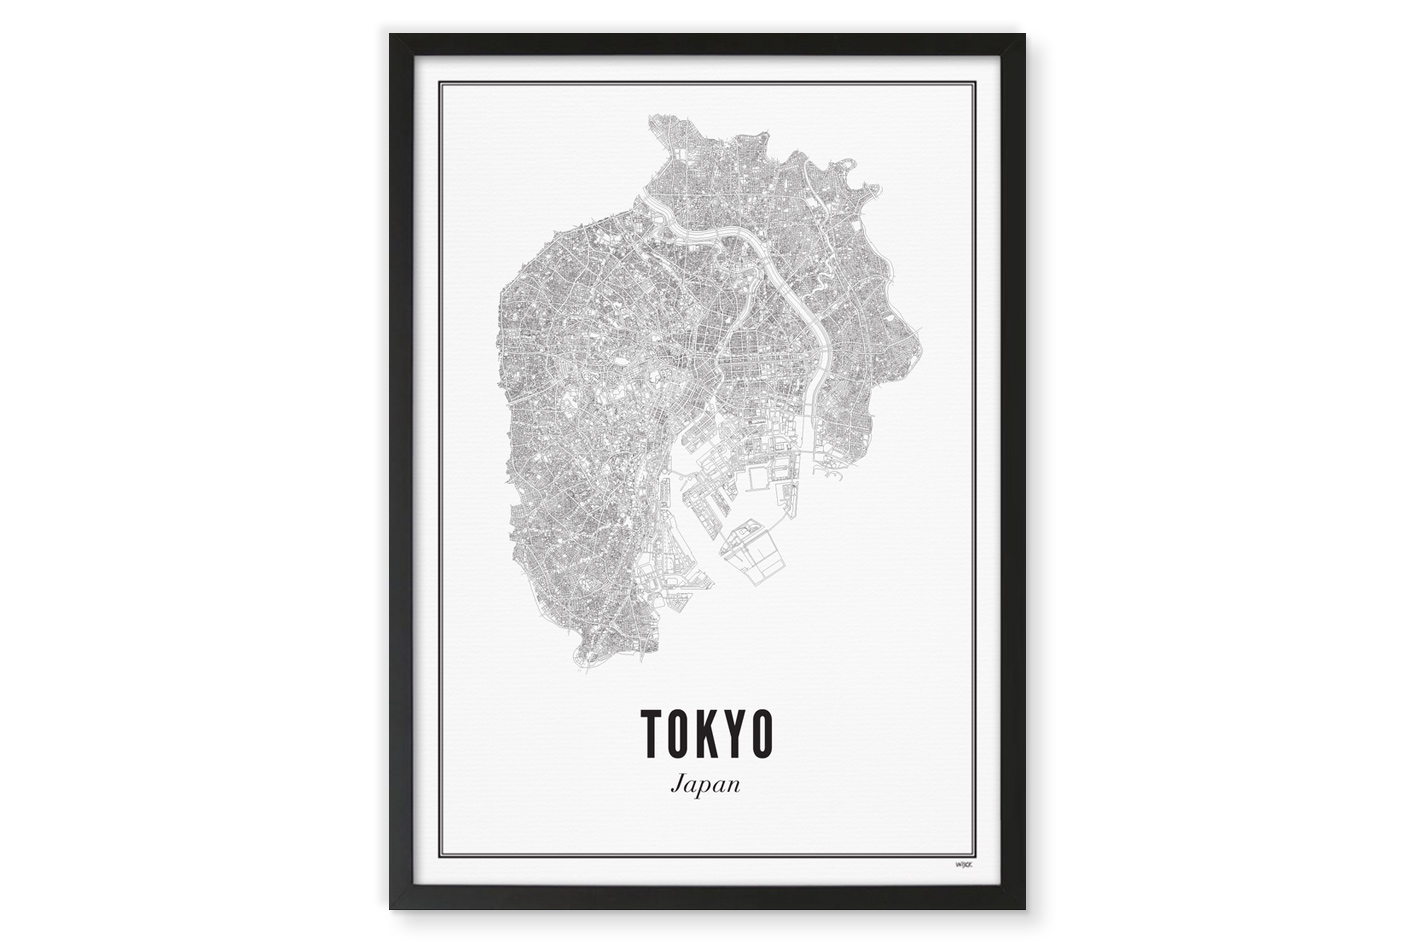 jpntokycitya4 0 metropolis tokyo black white card poster frame prints graphics 01OG2sXmx2ou6o0